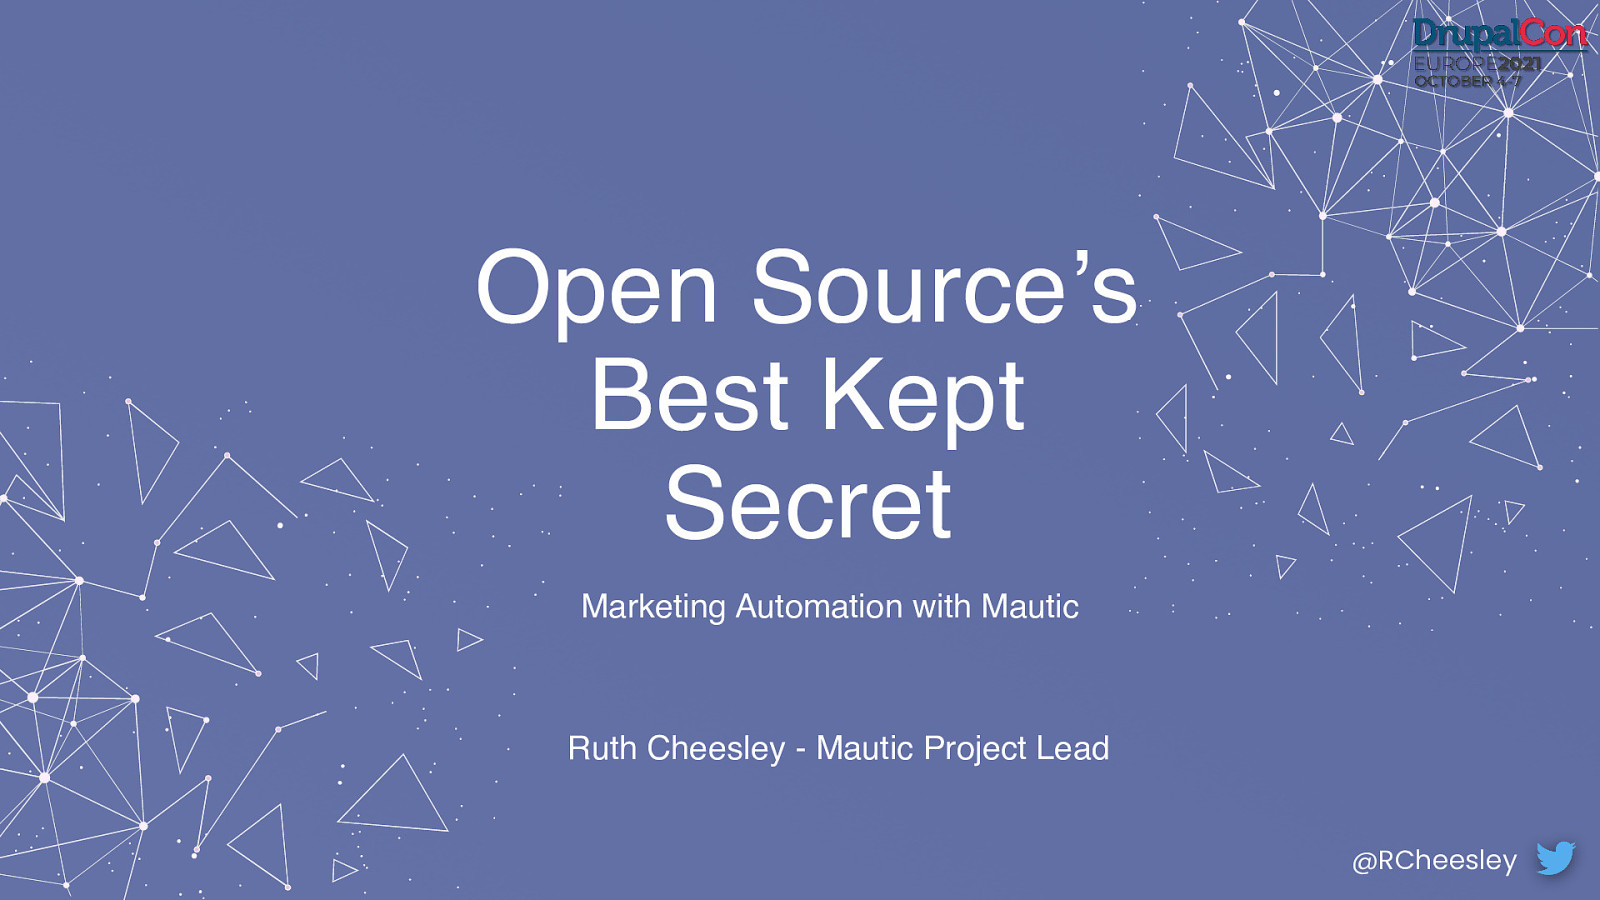 Open Source’s Best Kept Secret: Marketing Automation with Mautic